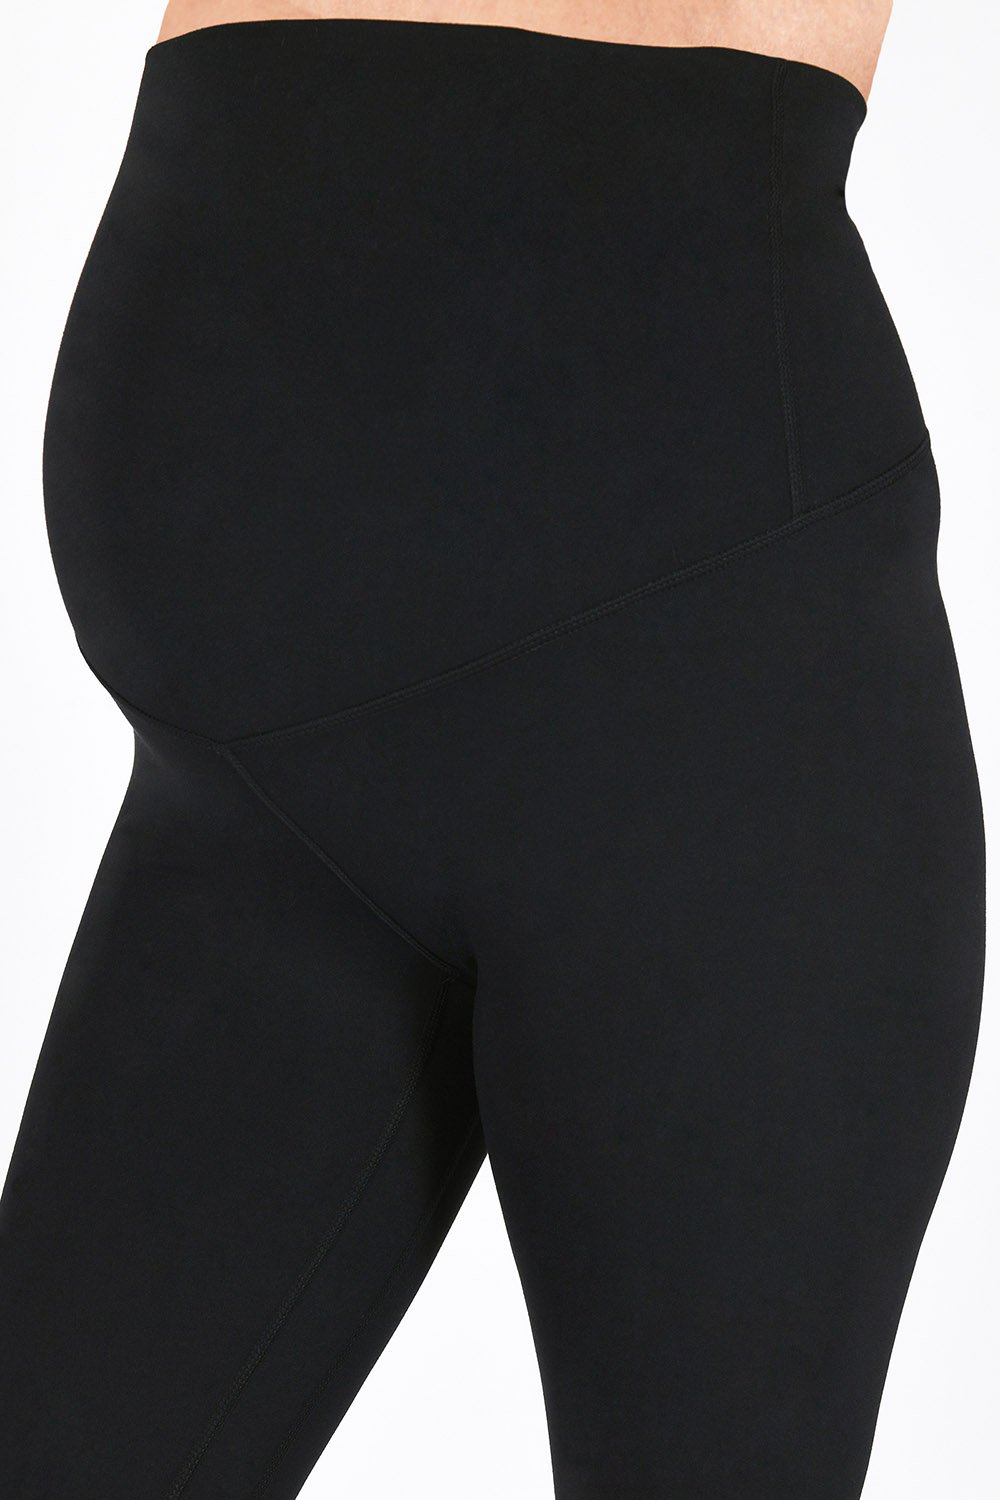 GapFit maternity blackout technology capri leggings | Clothes design, Gap  fit, Fashion tips